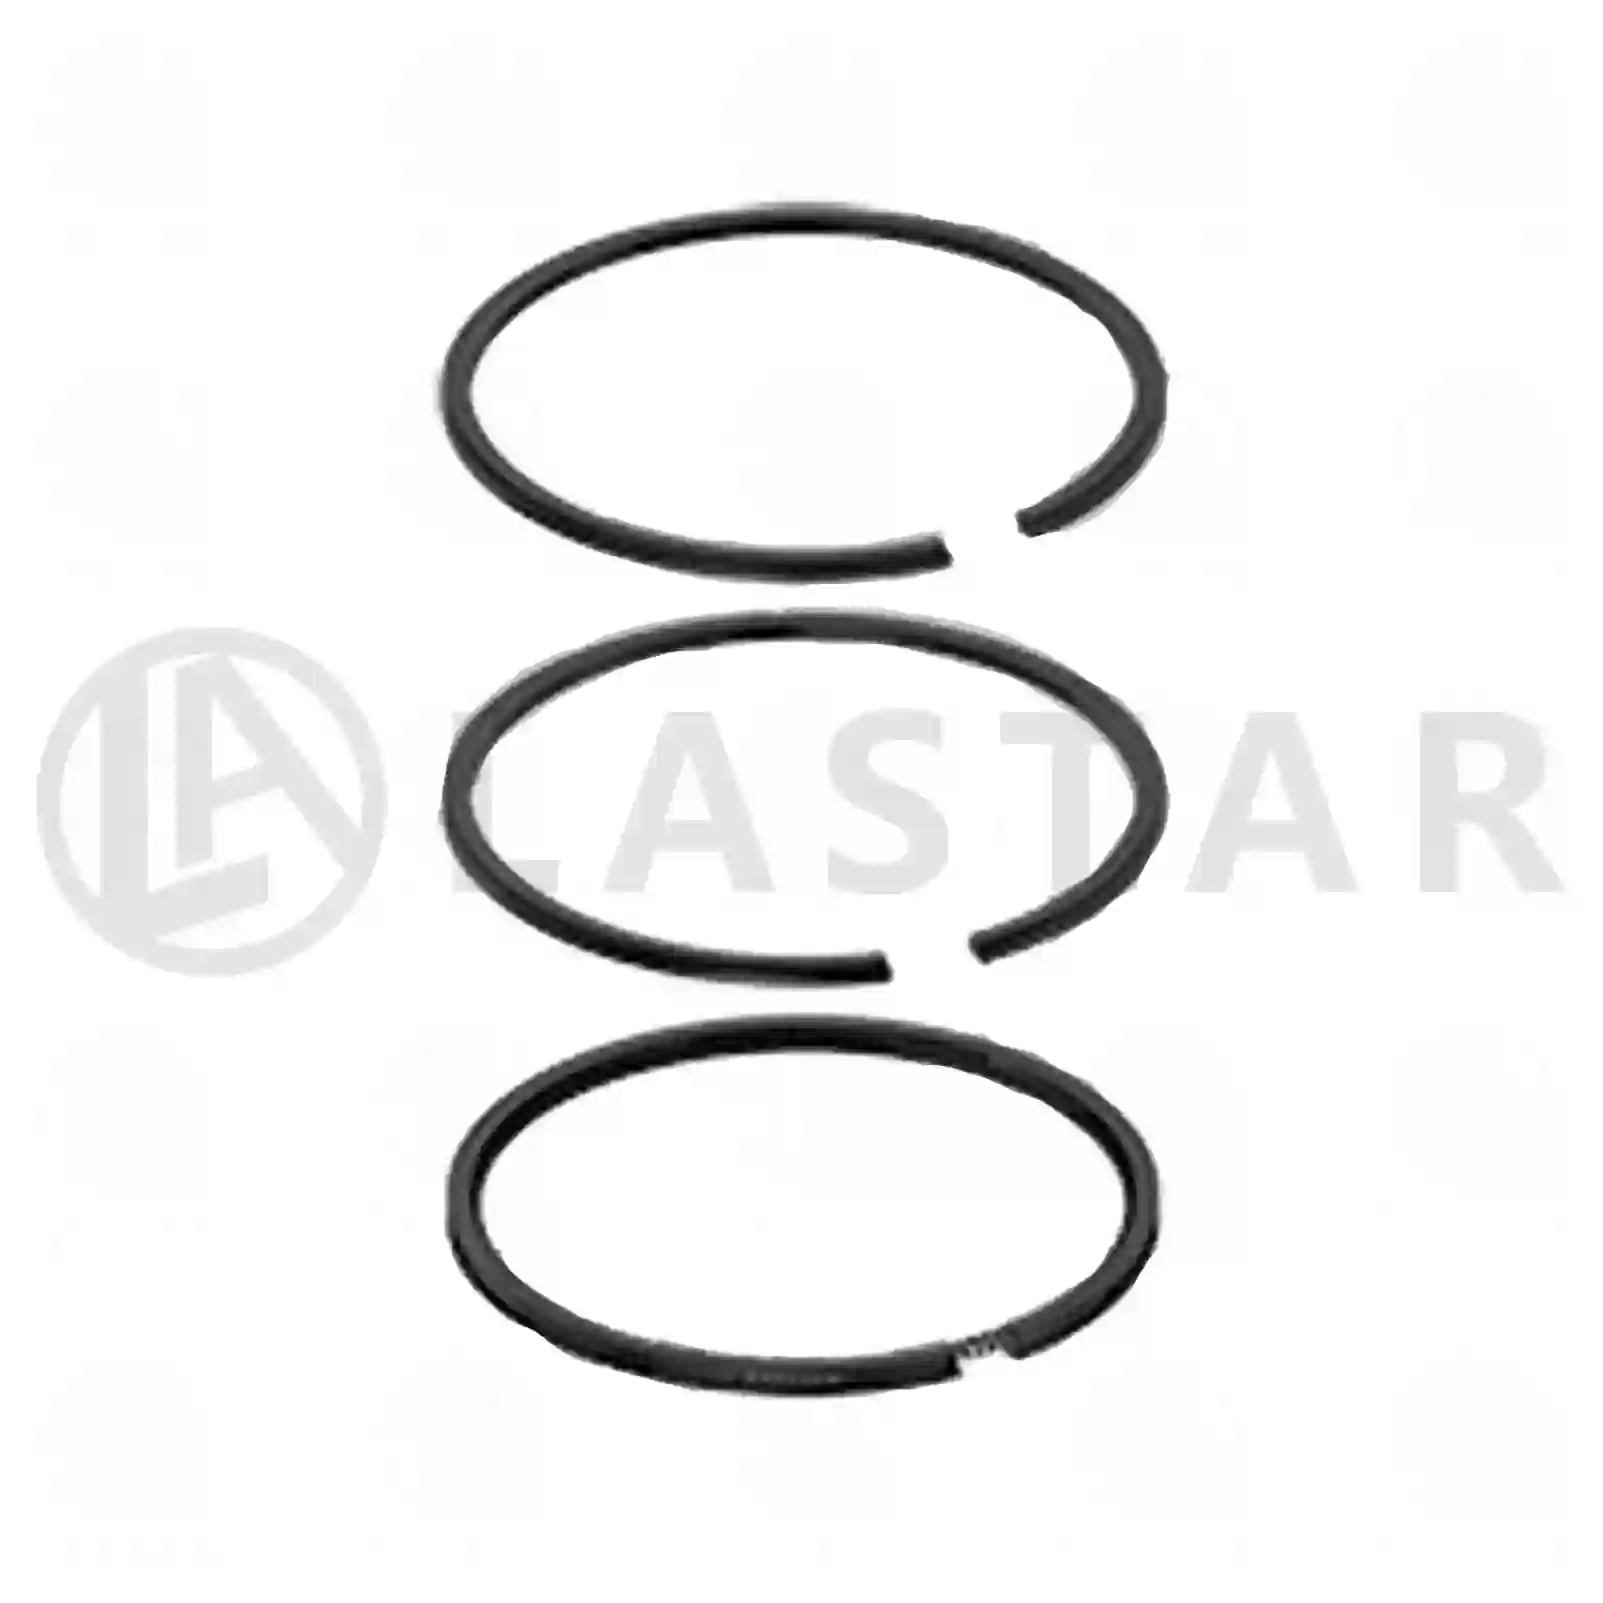  Piston ring kit || Lastar Spare Part | Truck Spare Parts, Auotomotive Spare Parts